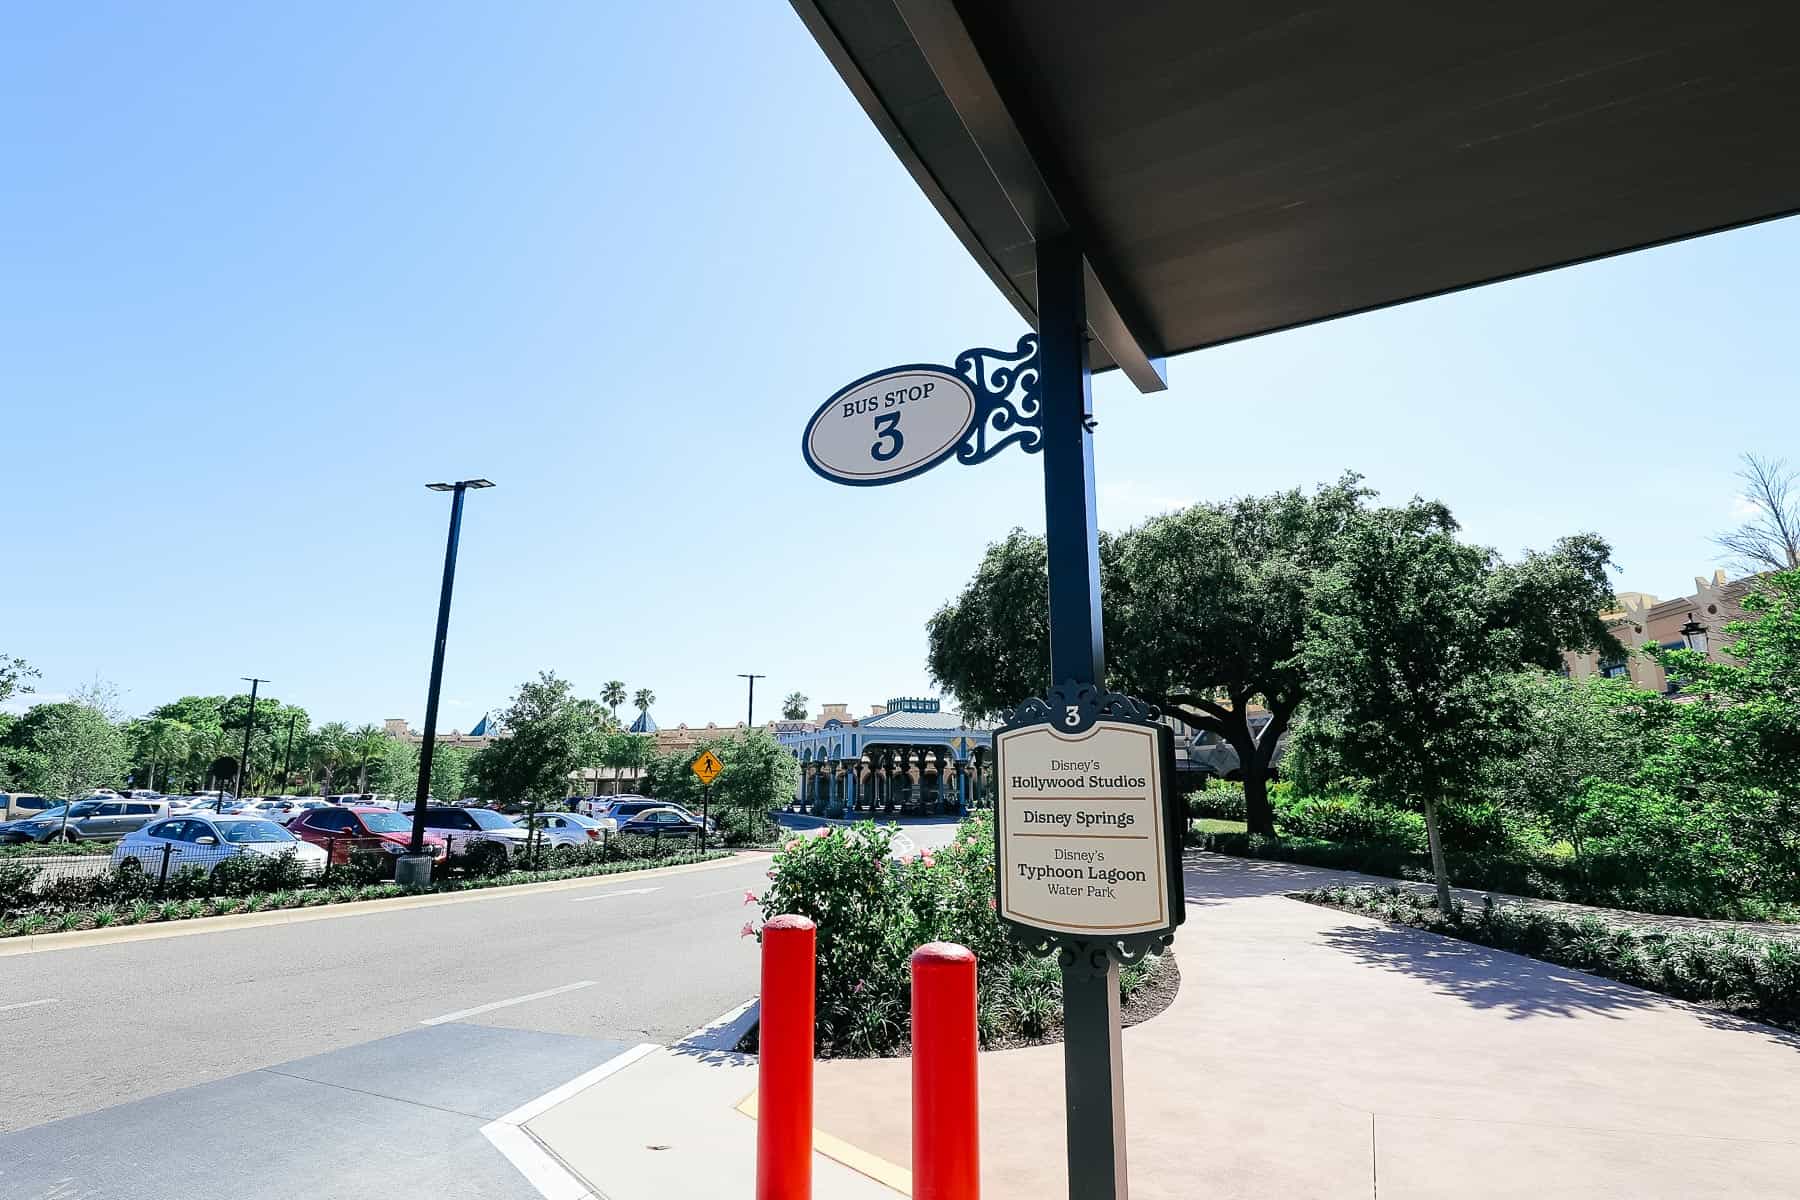 Bus stop at Coronado Springs for Hollywood Studios 